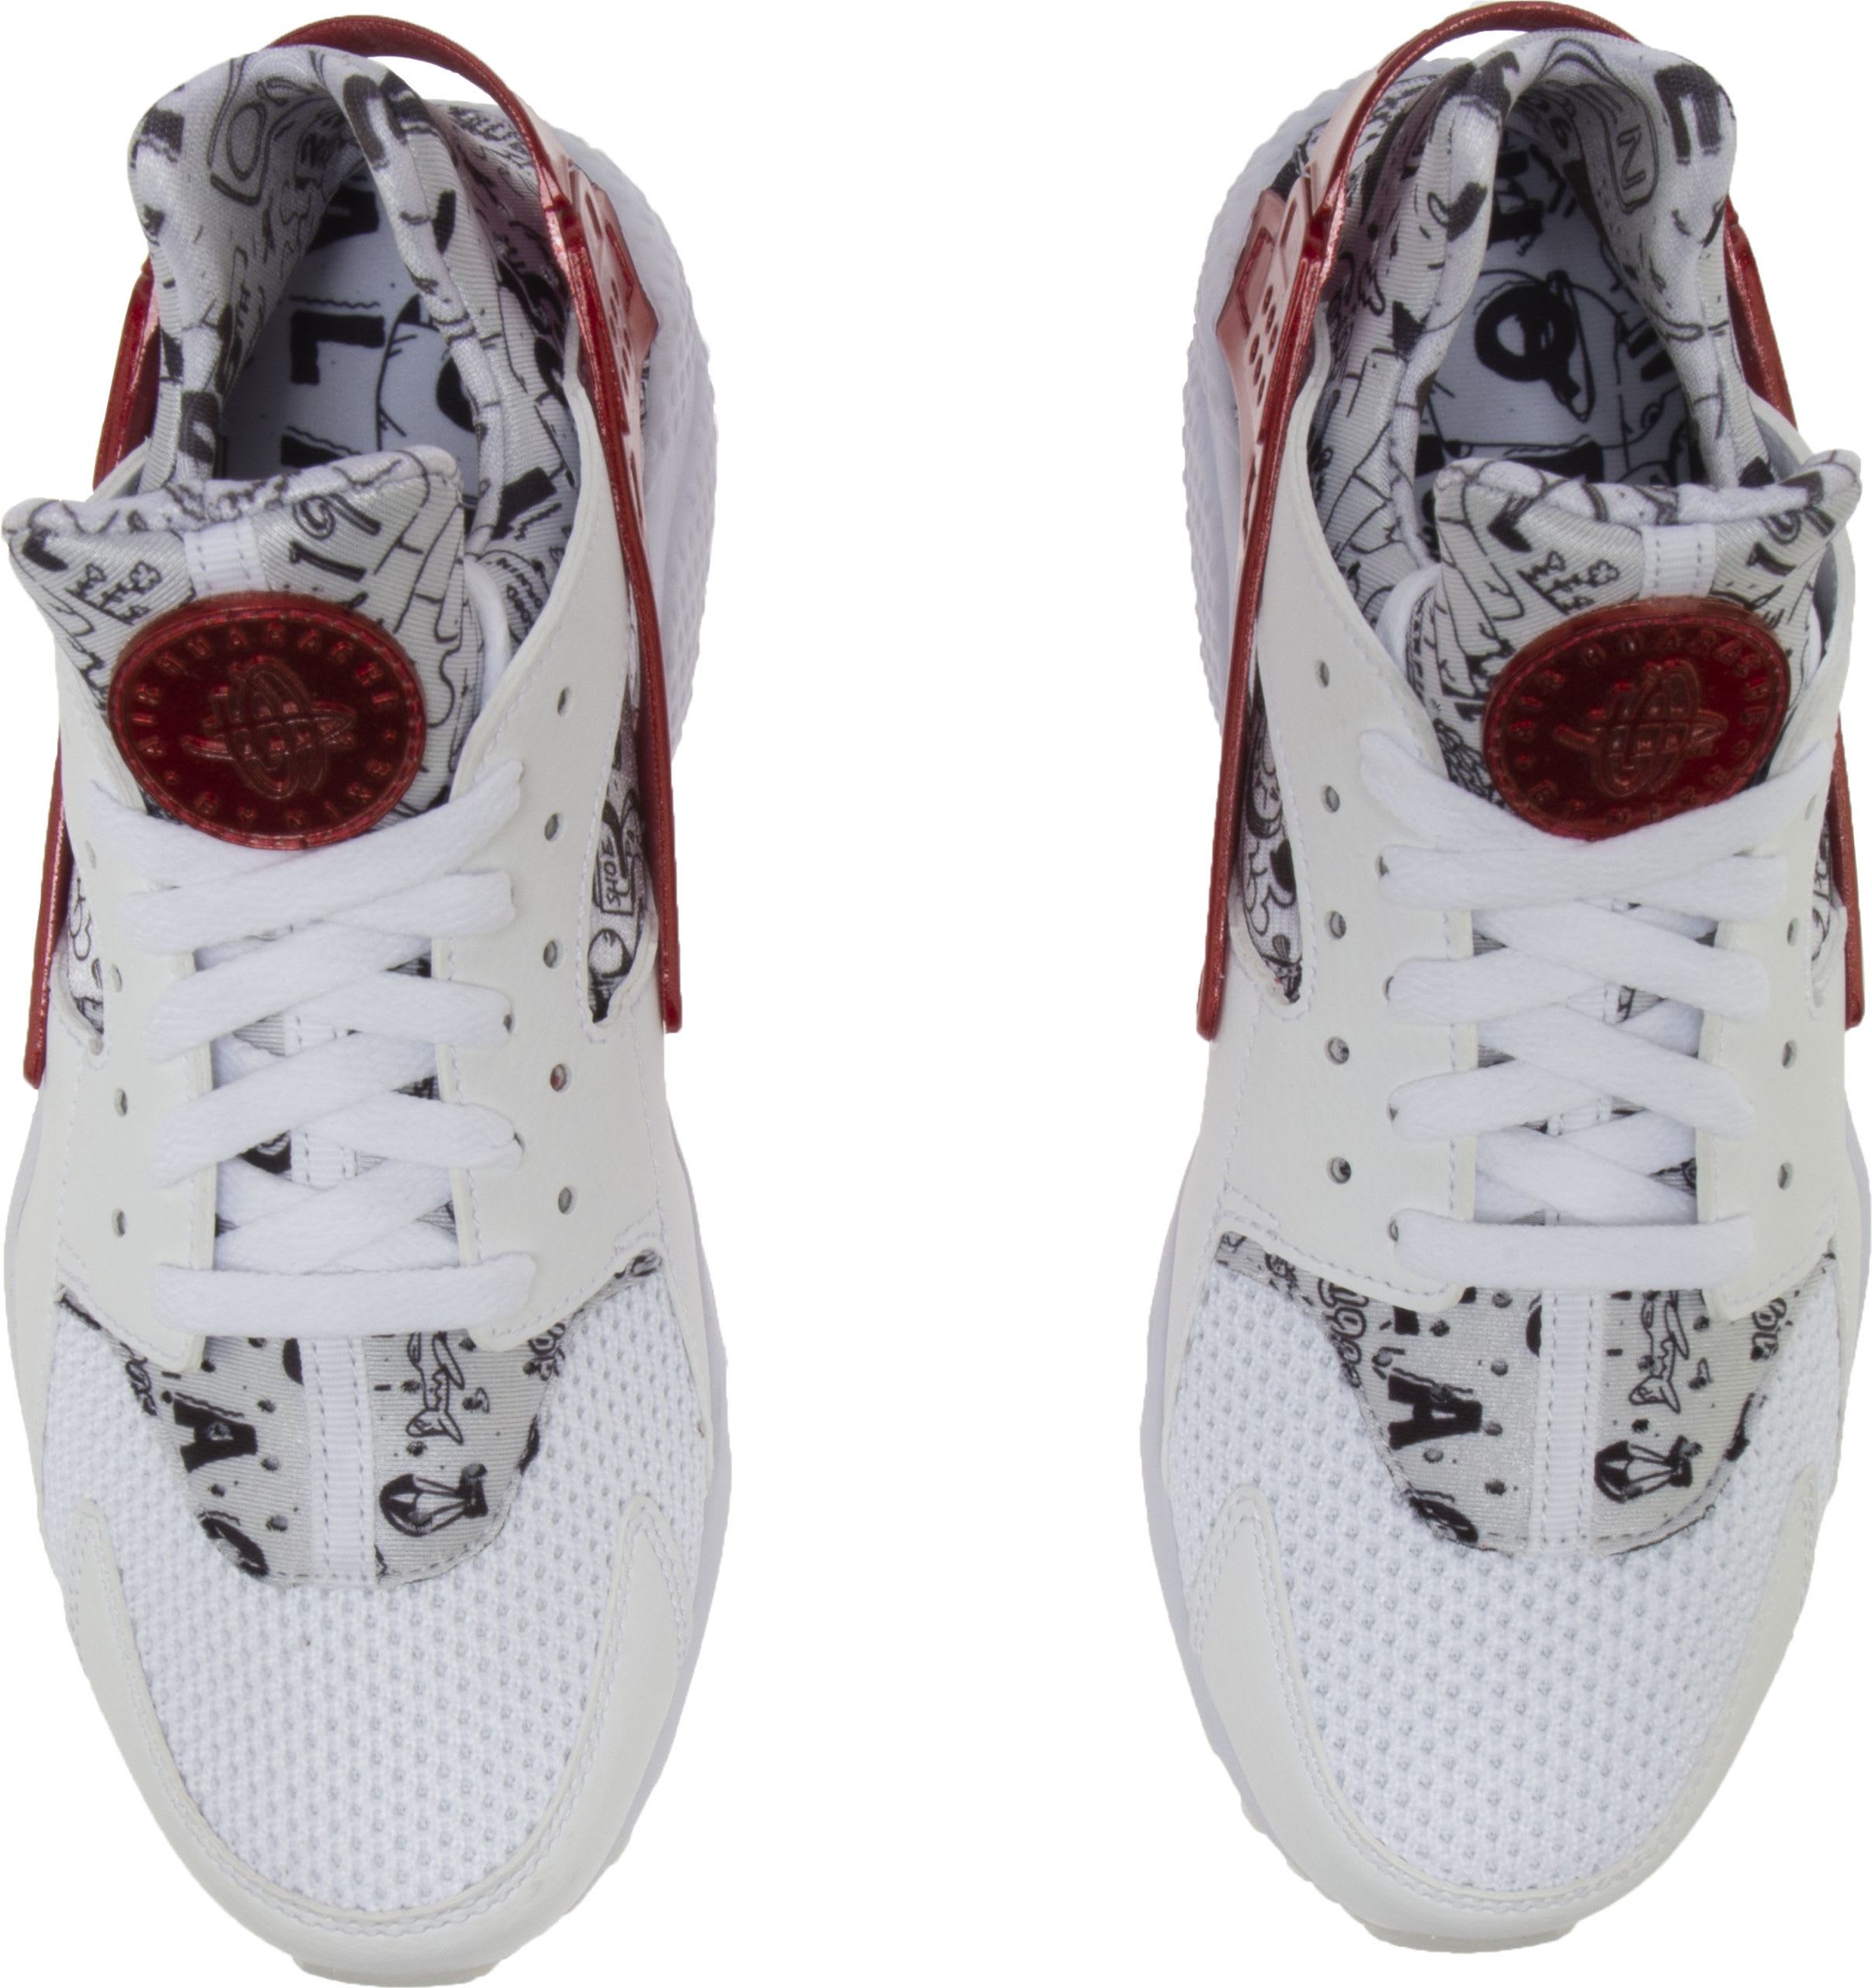 Shoe Palace x Nike Air Huarache White/Red/Platinum &#x27;Joonbug&#x27; AJ5578-101 (Top)